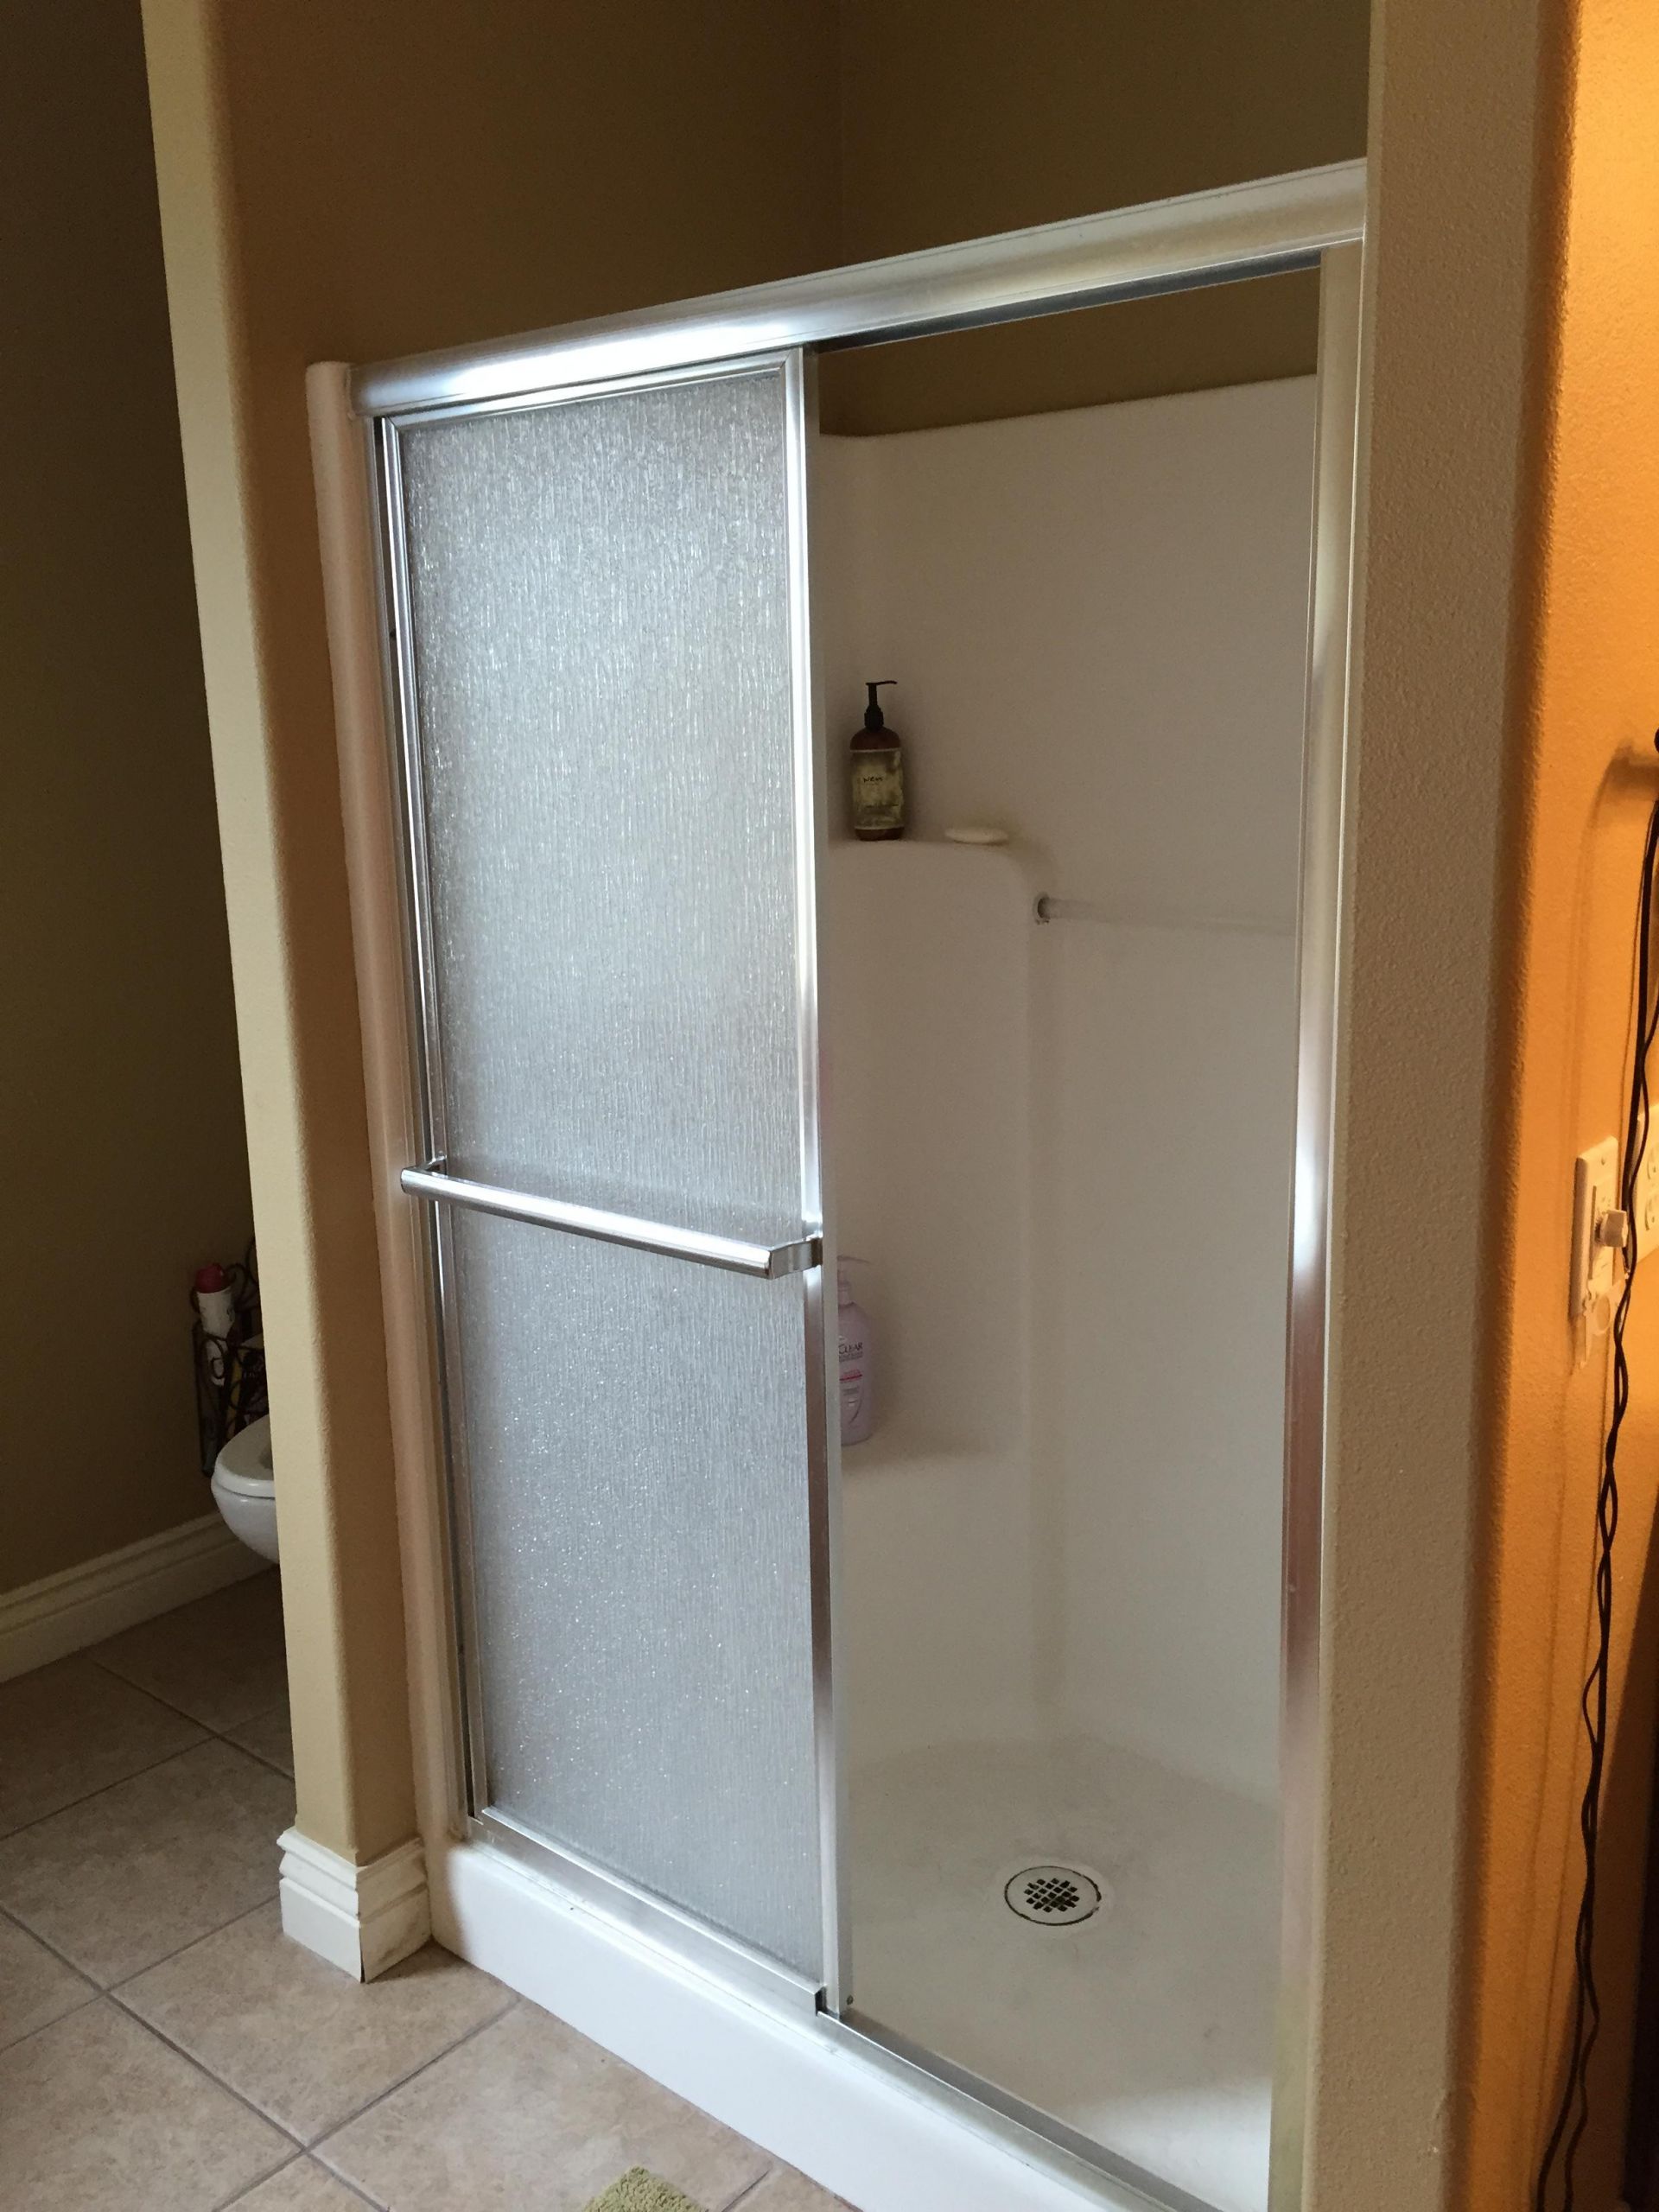 Home Depot Bathroom Shower Stalls
 Replacing fiberglass shower stall